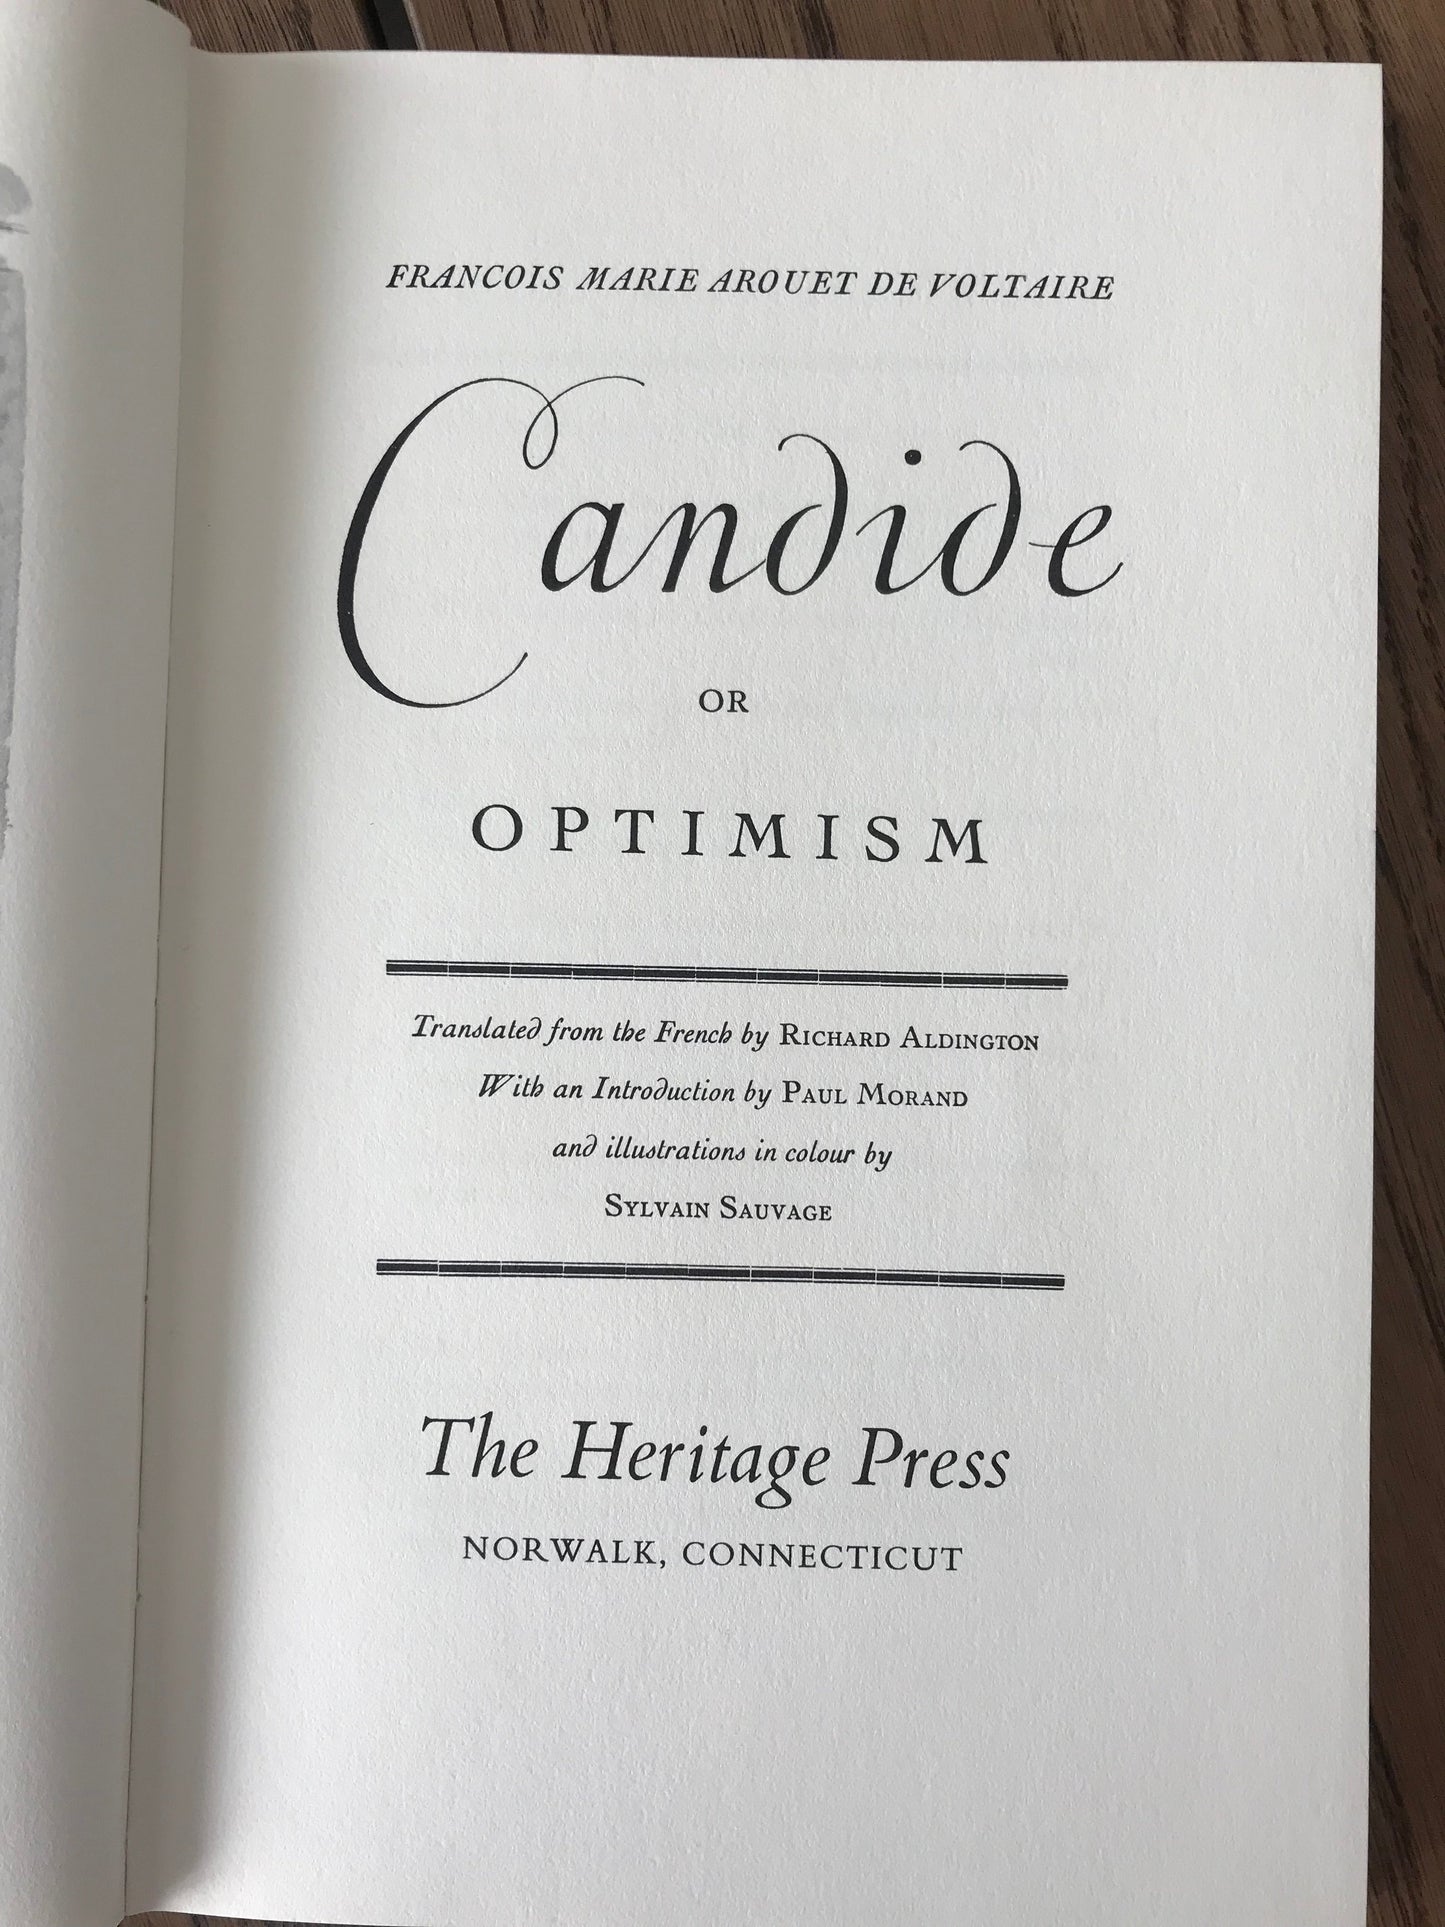 CANDIDE OR OPTIMISM - BY FRANCOIS MARIE AROUET DE VOLTAIRE BooksCardsNBikes